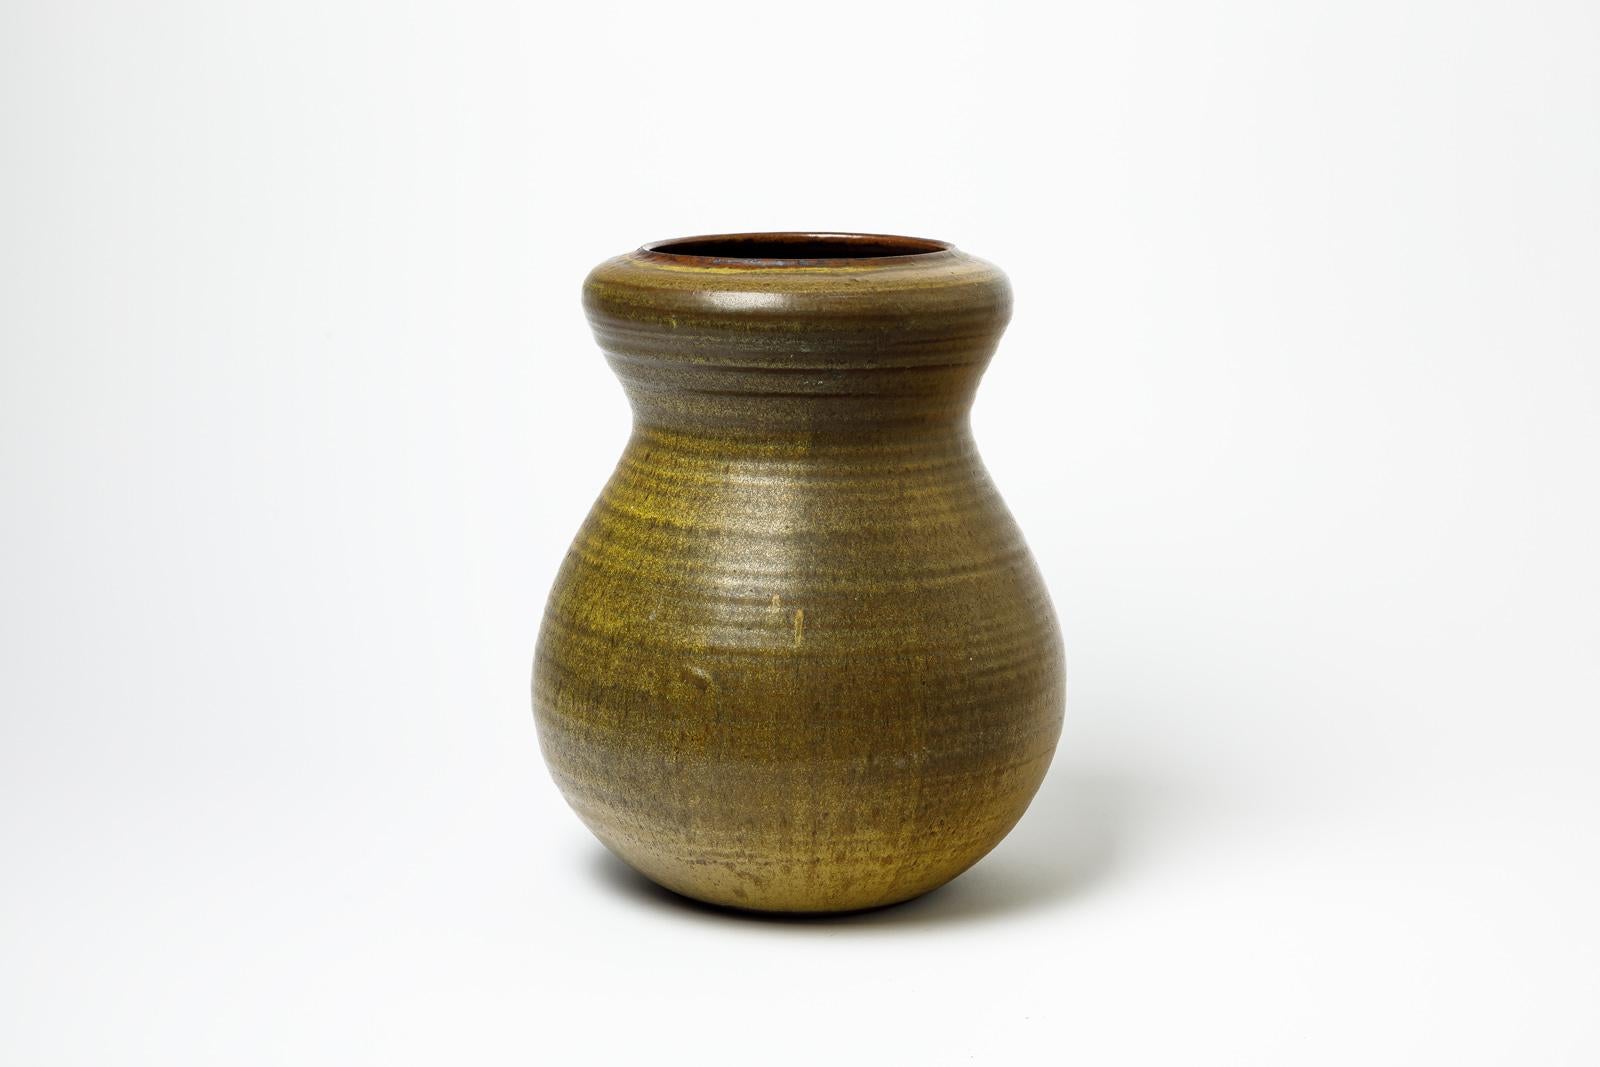 dark green and brown glazed stoneware vase by Daniel de Montmollin.
Artist signature under the base. 
Circa 1990-2000.
H : 13.4’ x 9.4’ inches.